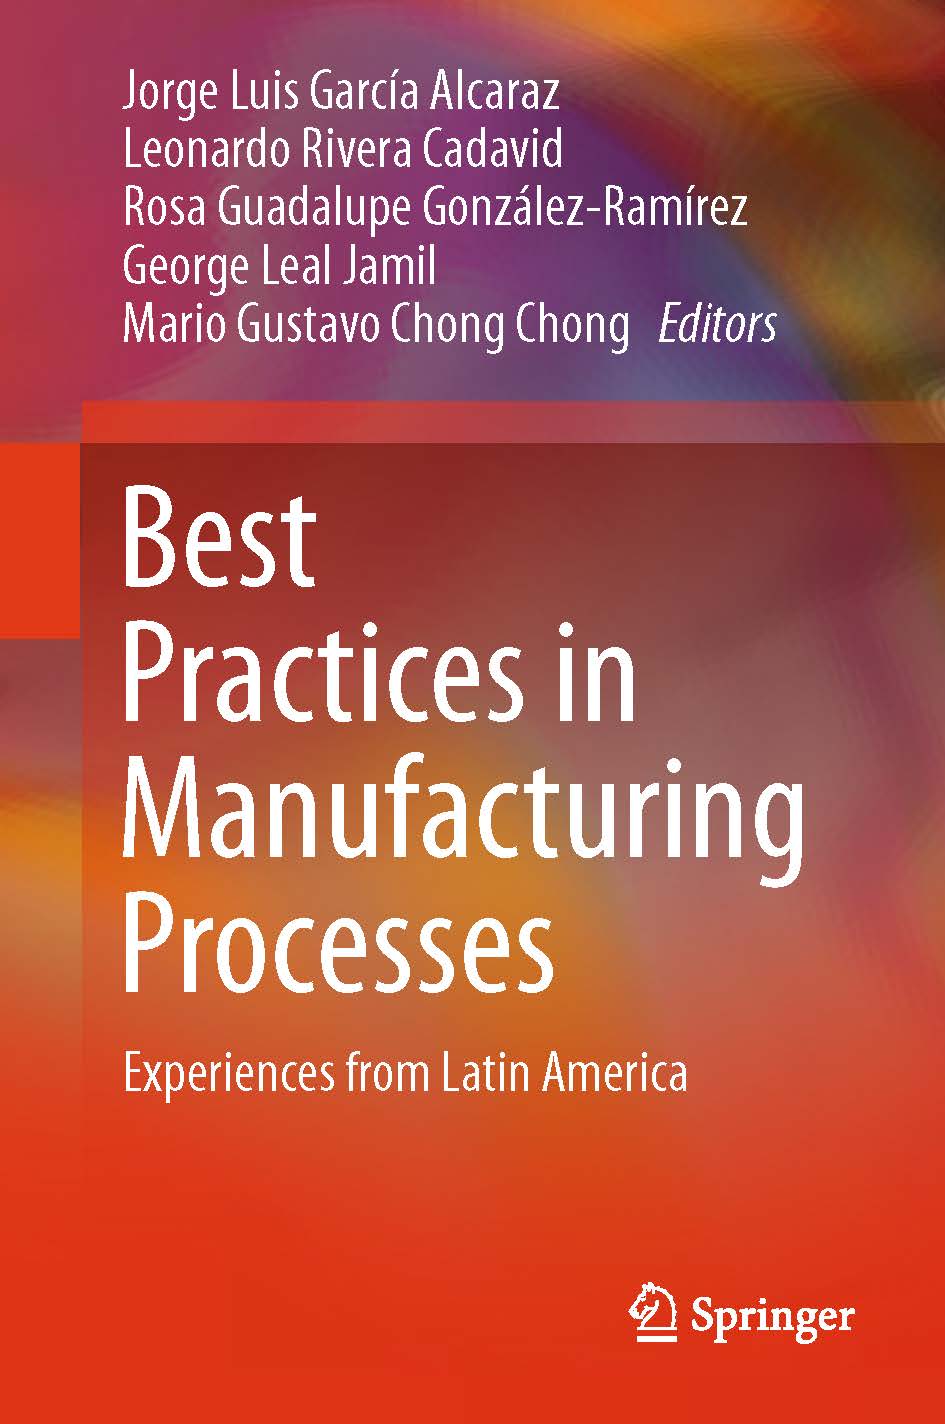 页面提取自－2019_Book_Best Practices in Manufacturing Processes.jpg